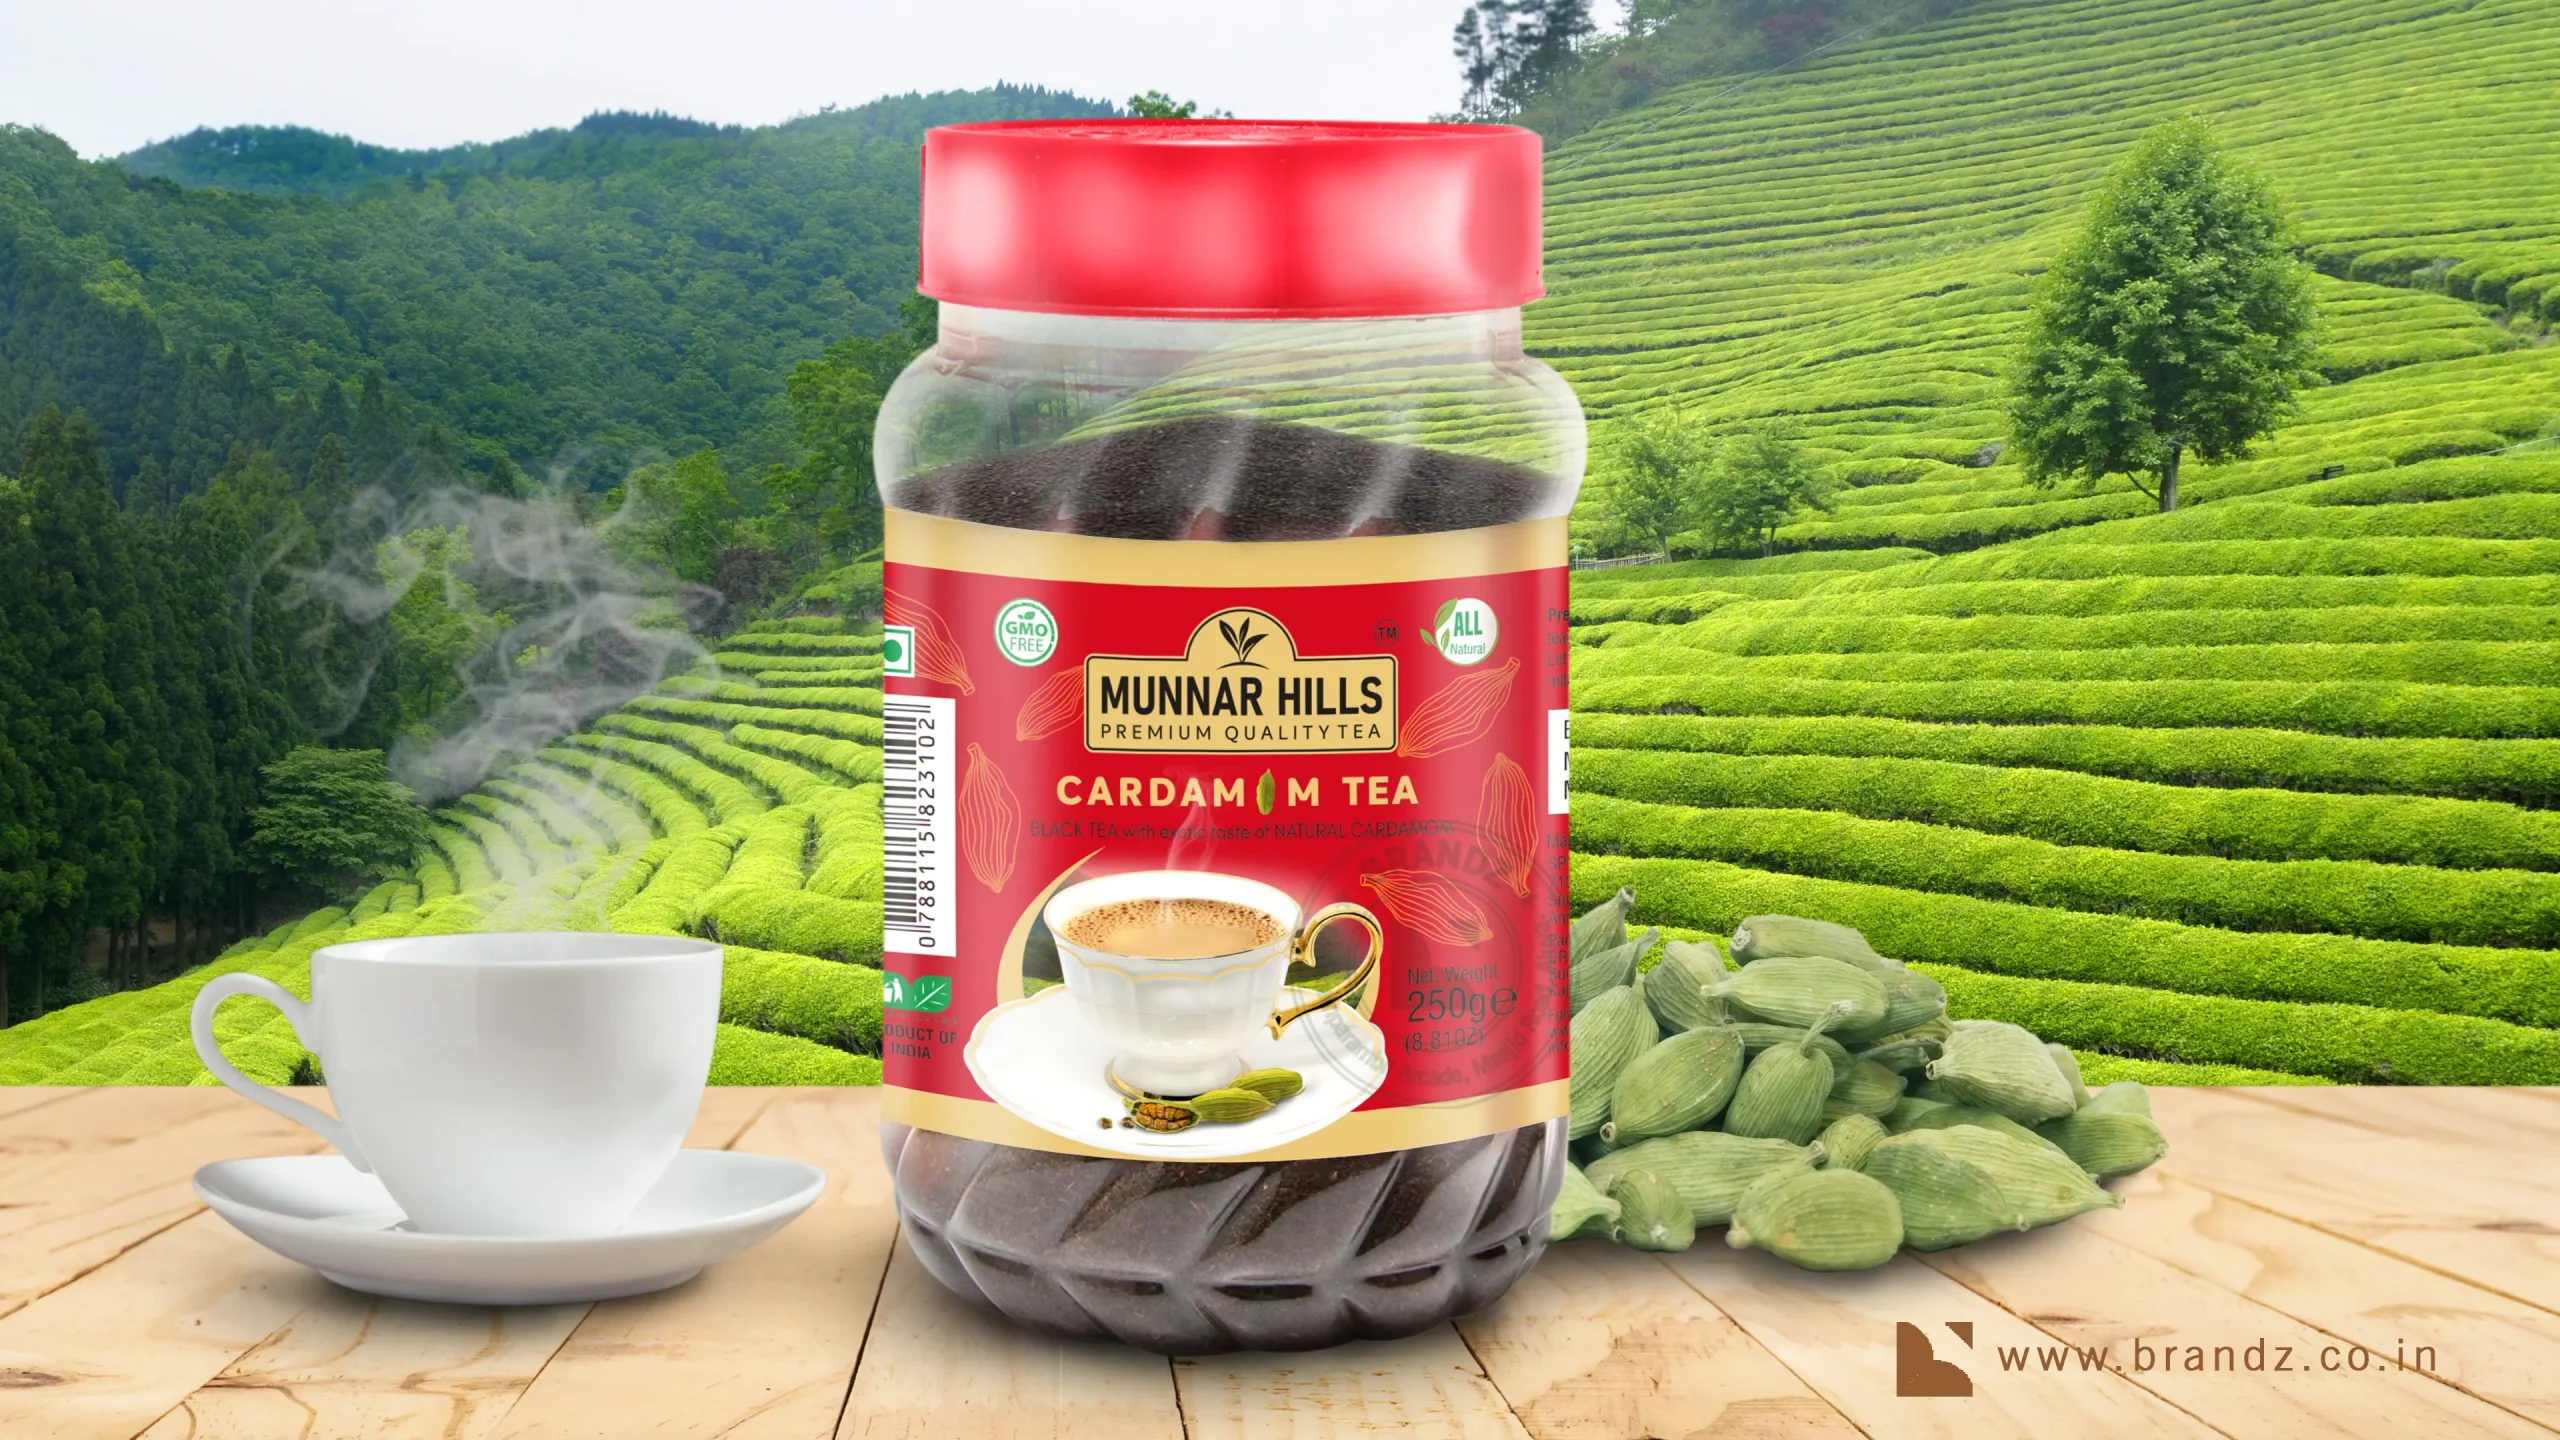 Munnar Hills Cardamom Tea Label